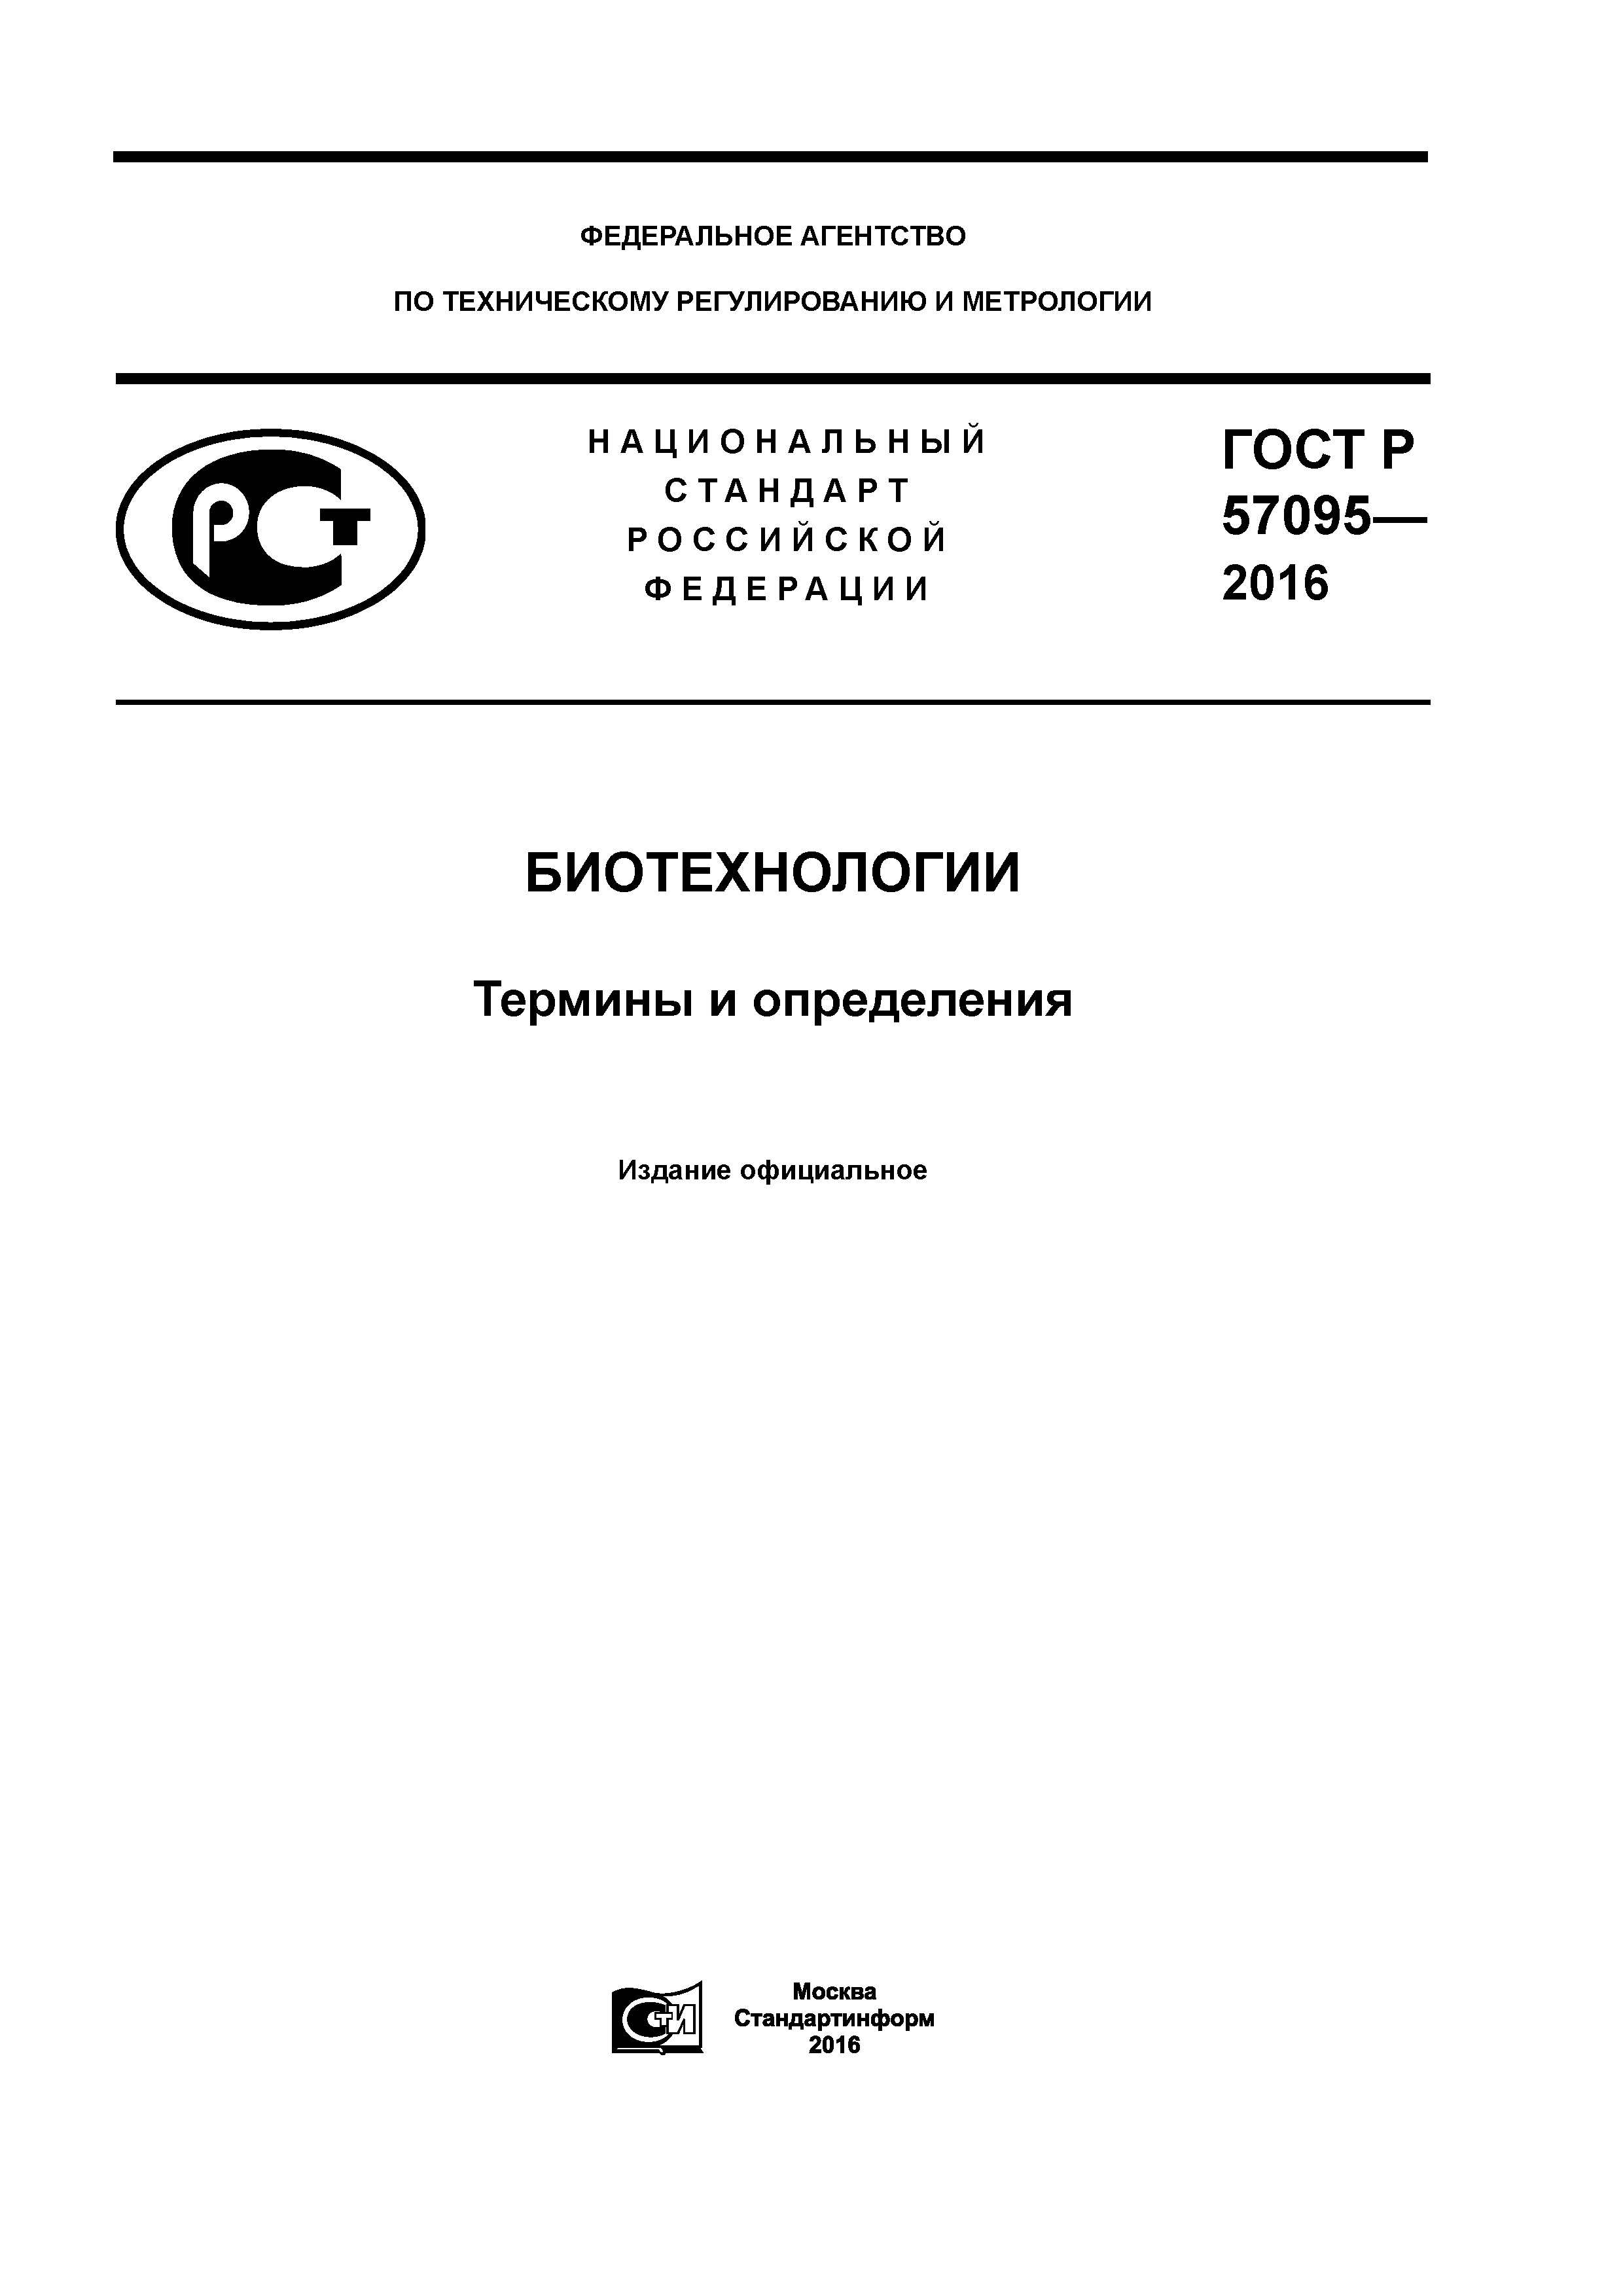 ГОСТ Р 57095-2016